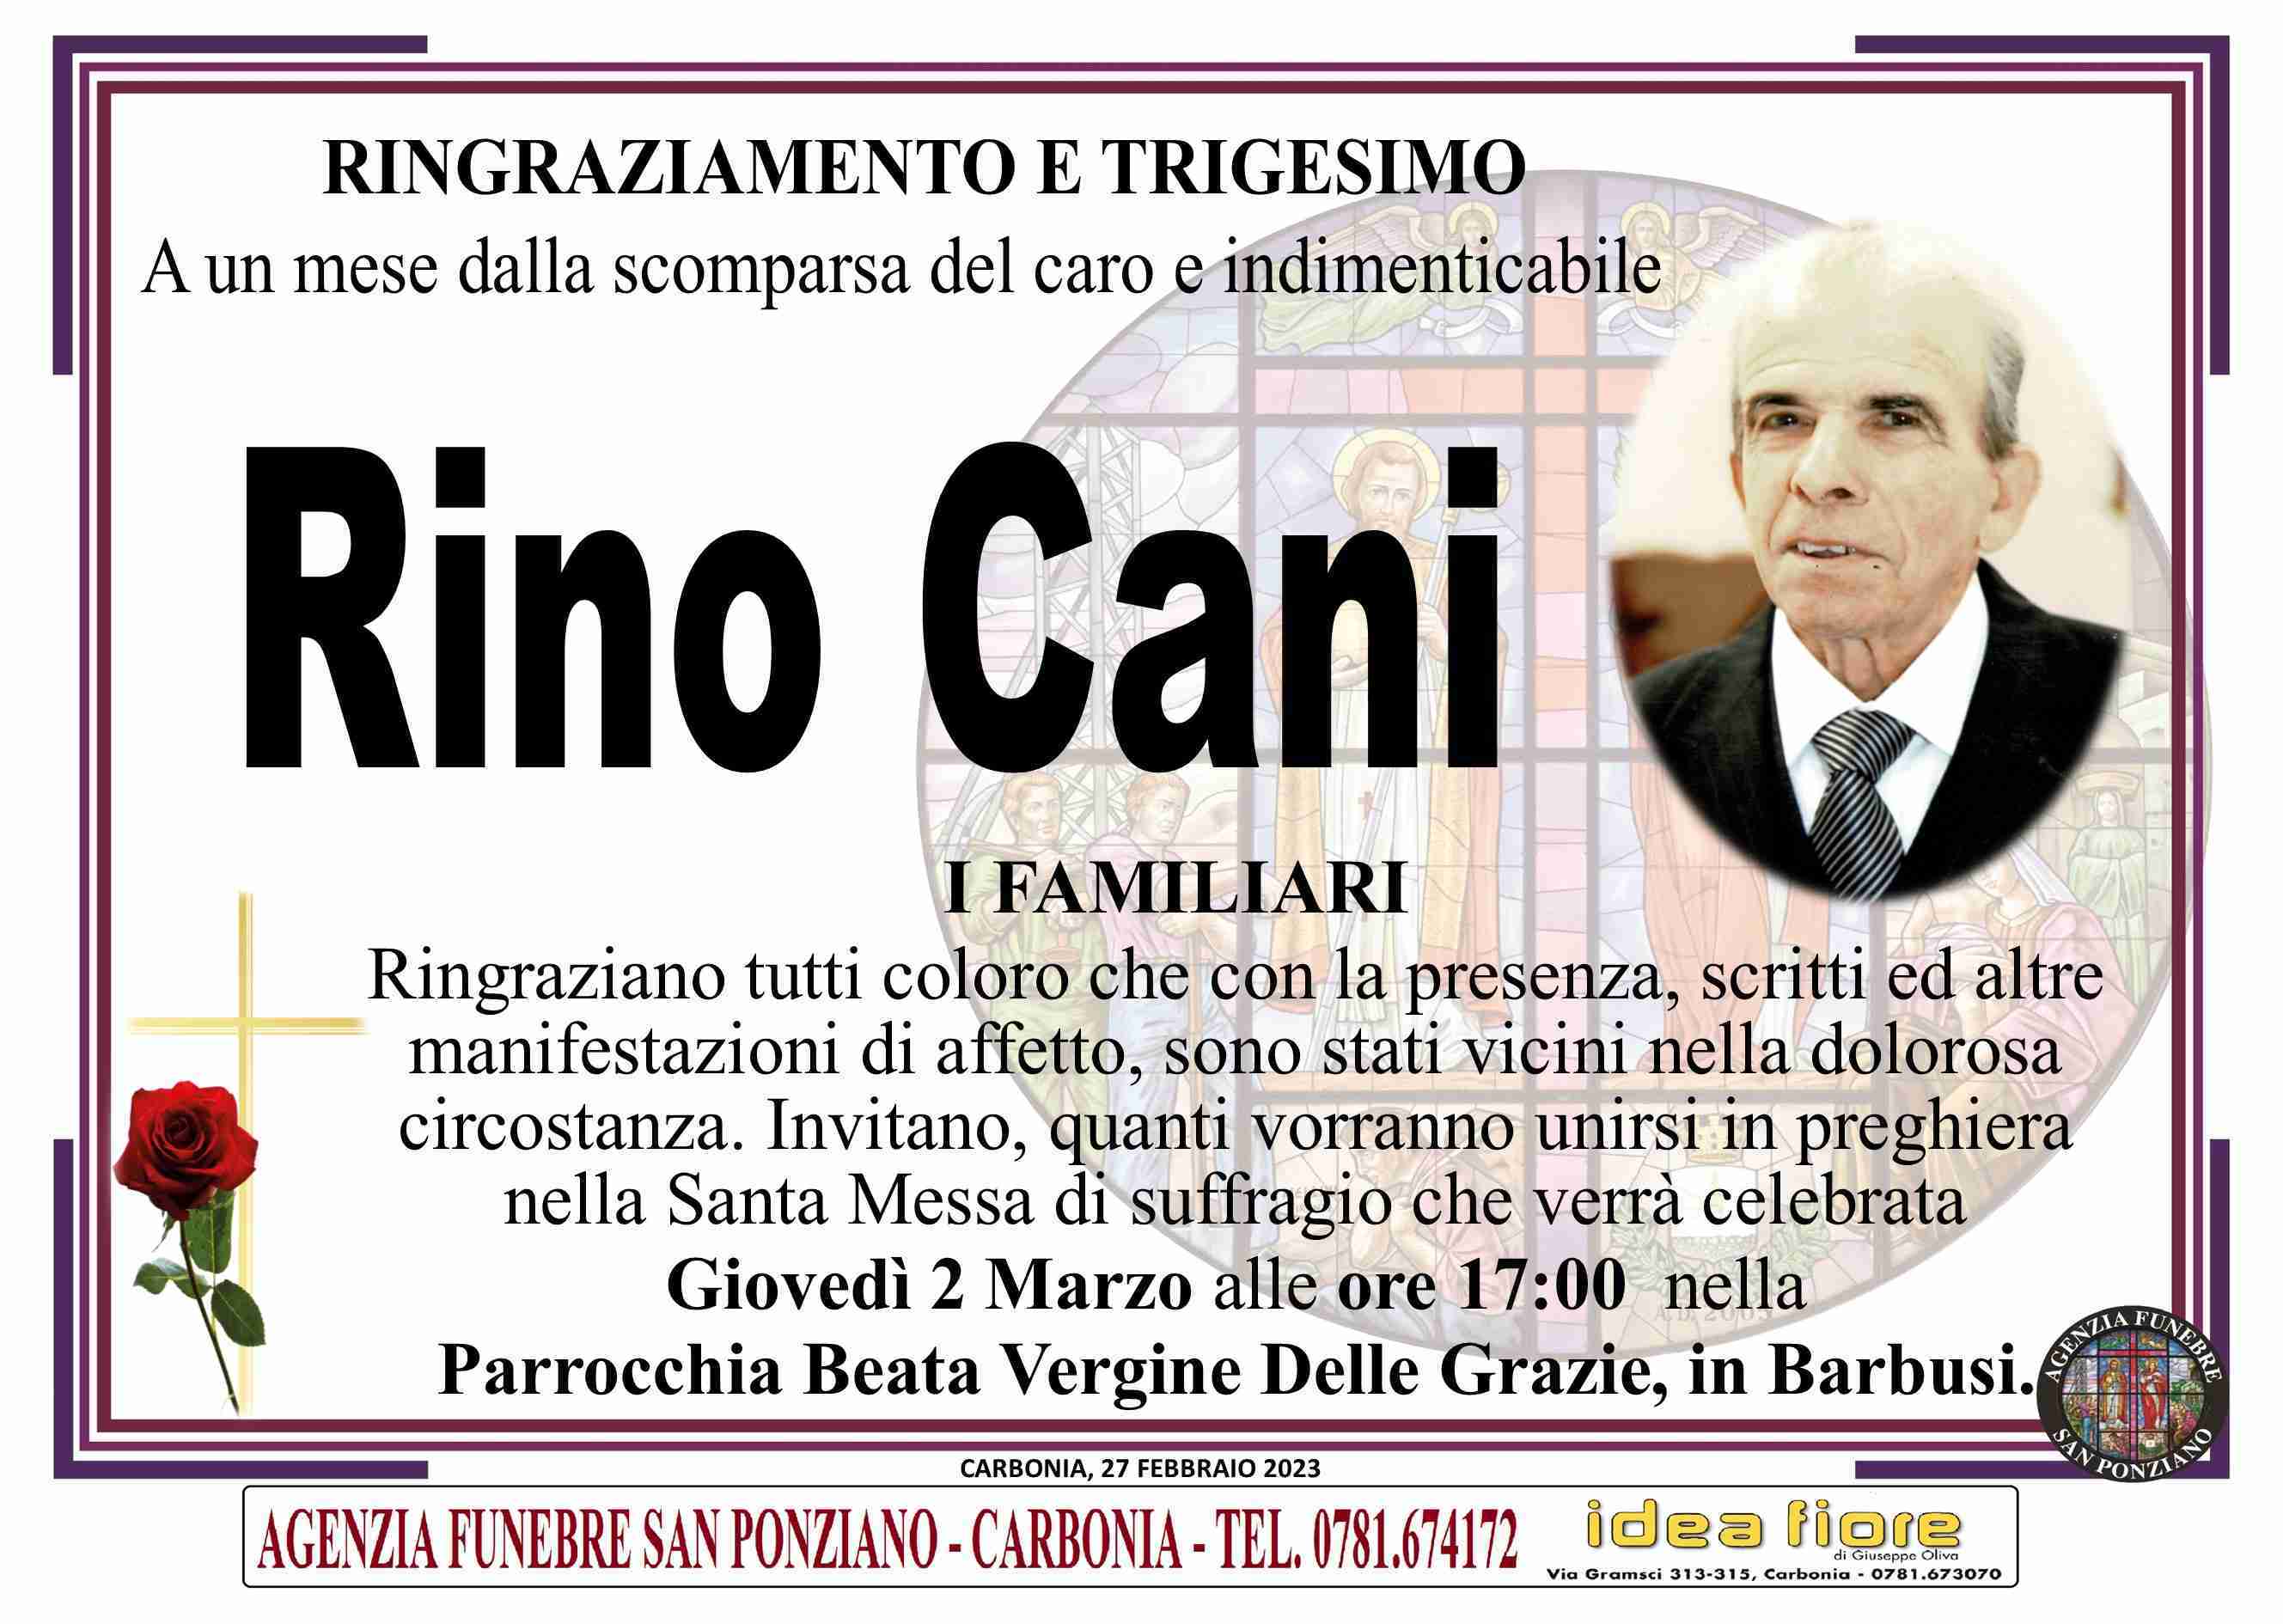 Rino Cani